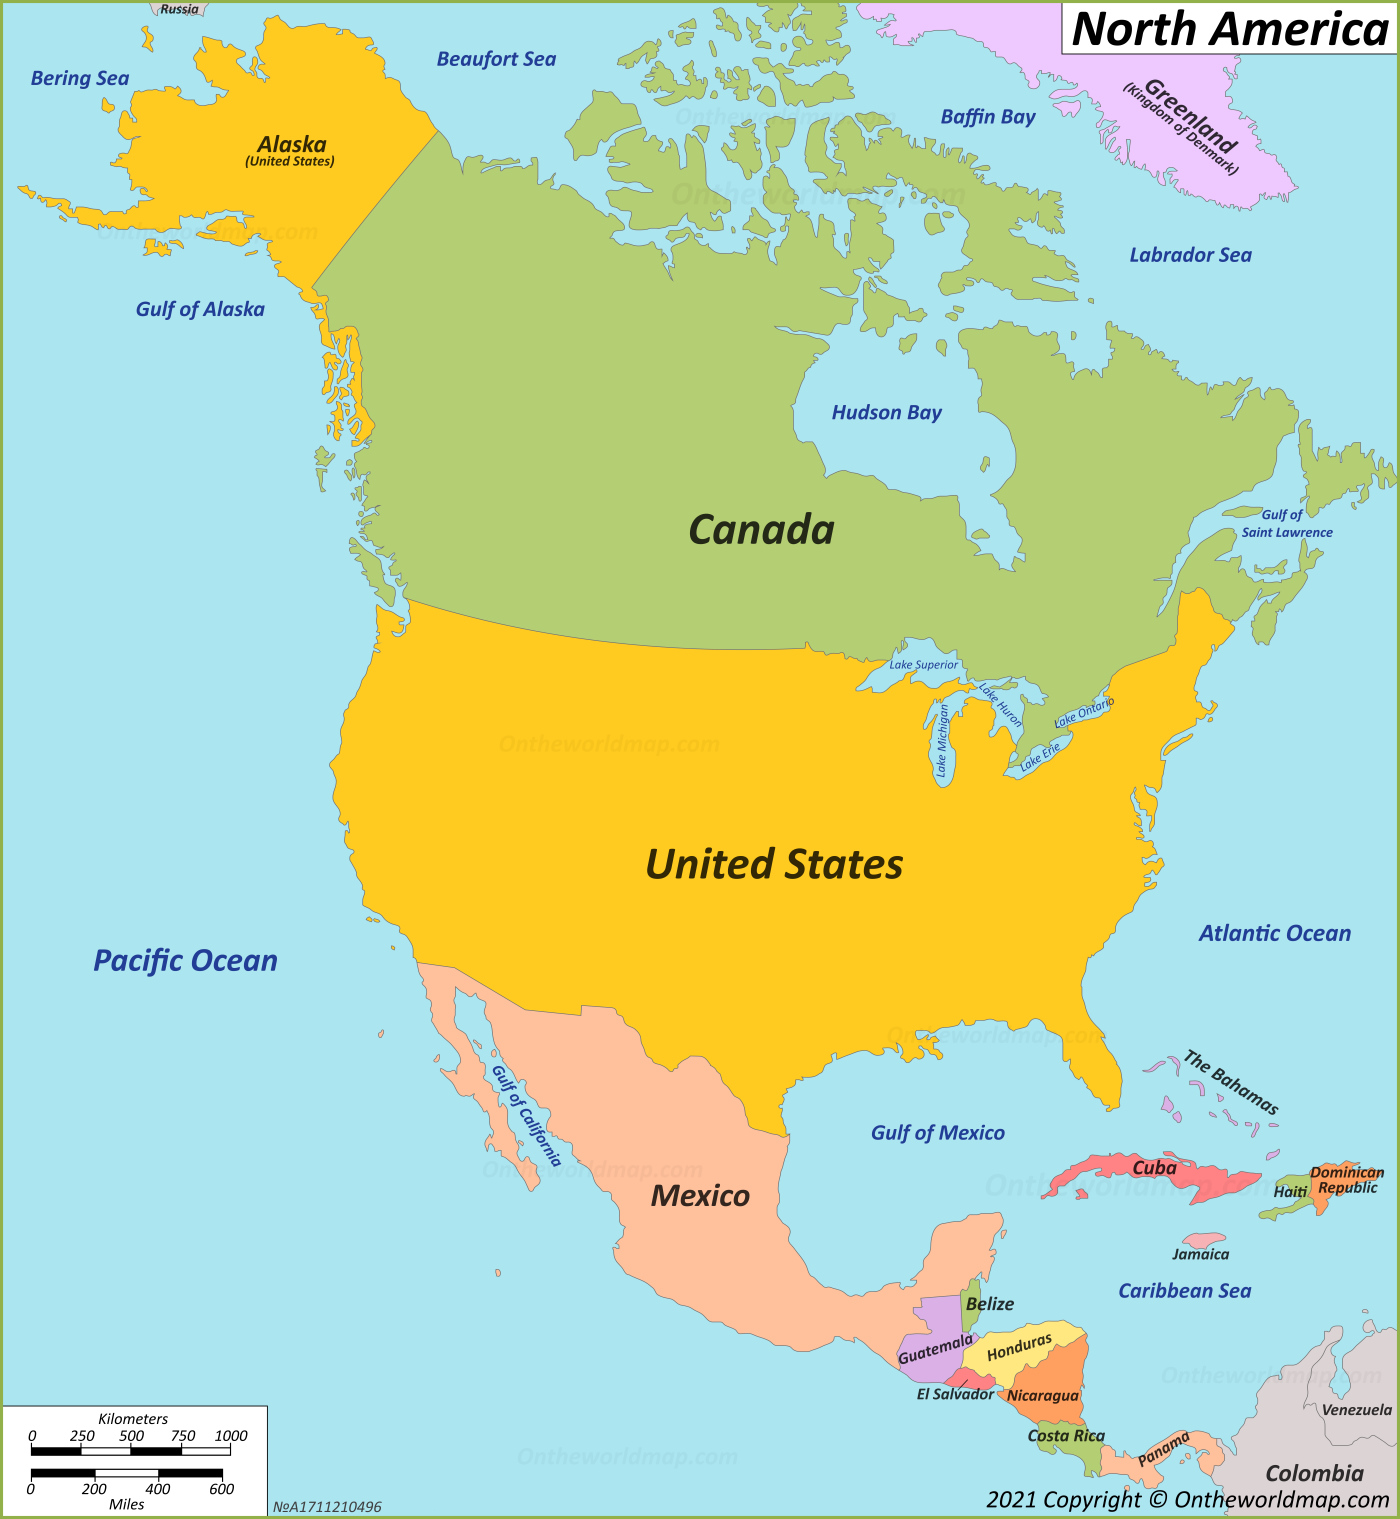 America north Northern America